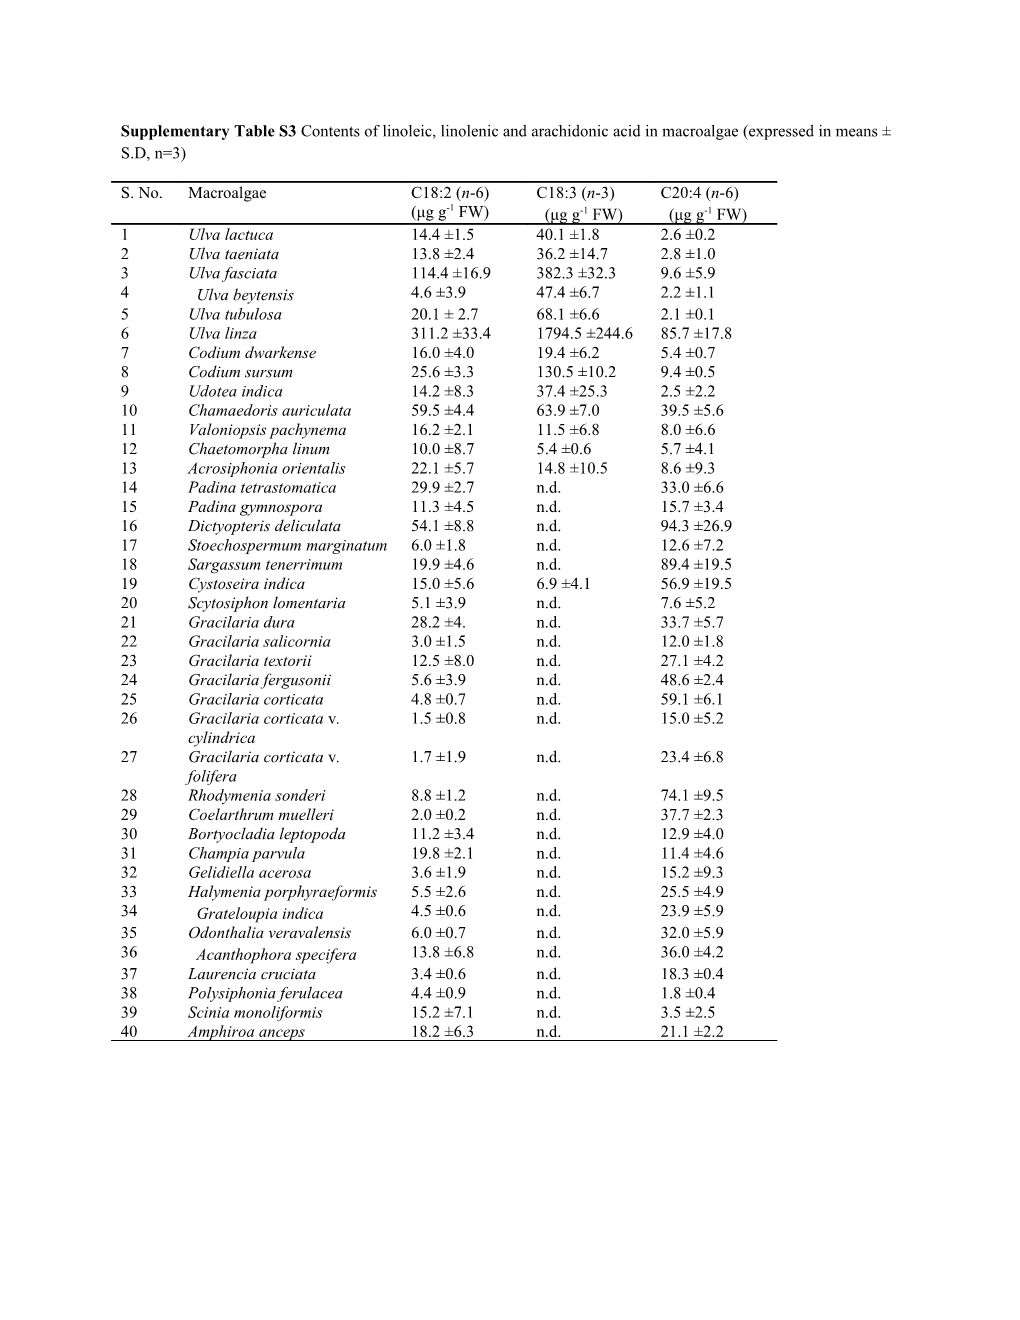 Supplementary Table S3 Contents of Linoleic, Linolenic and Arachidonic Acid in Macroalgae